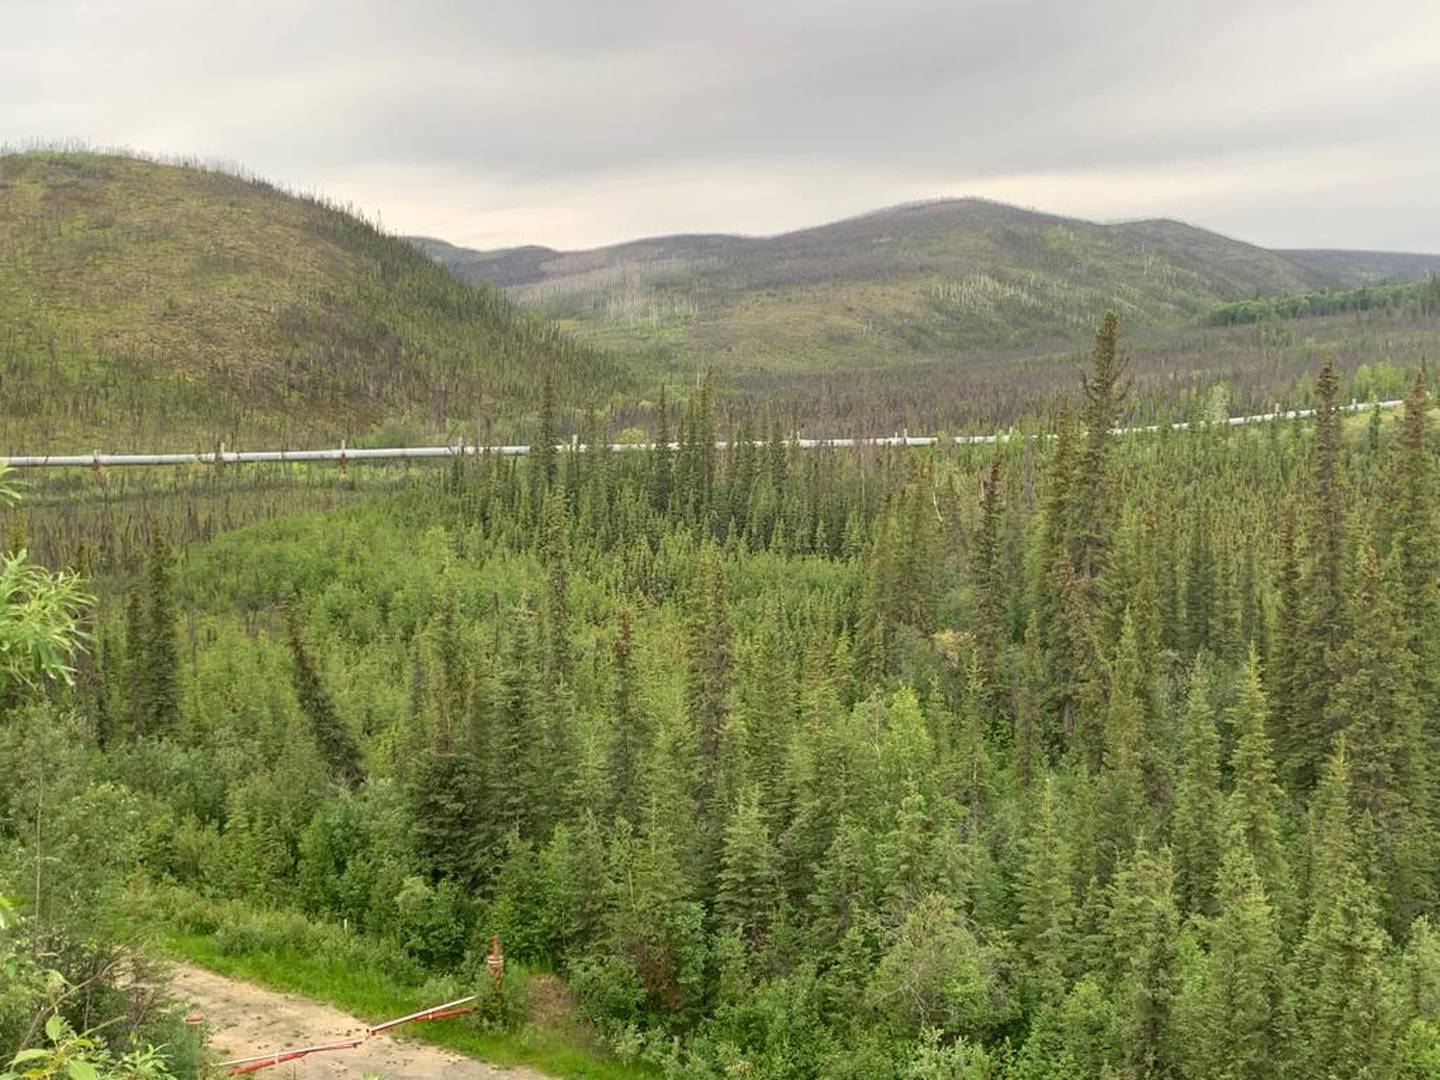 Tip2Top in Alaska: The Alaska Gas Pipeline near the Dalton Highway